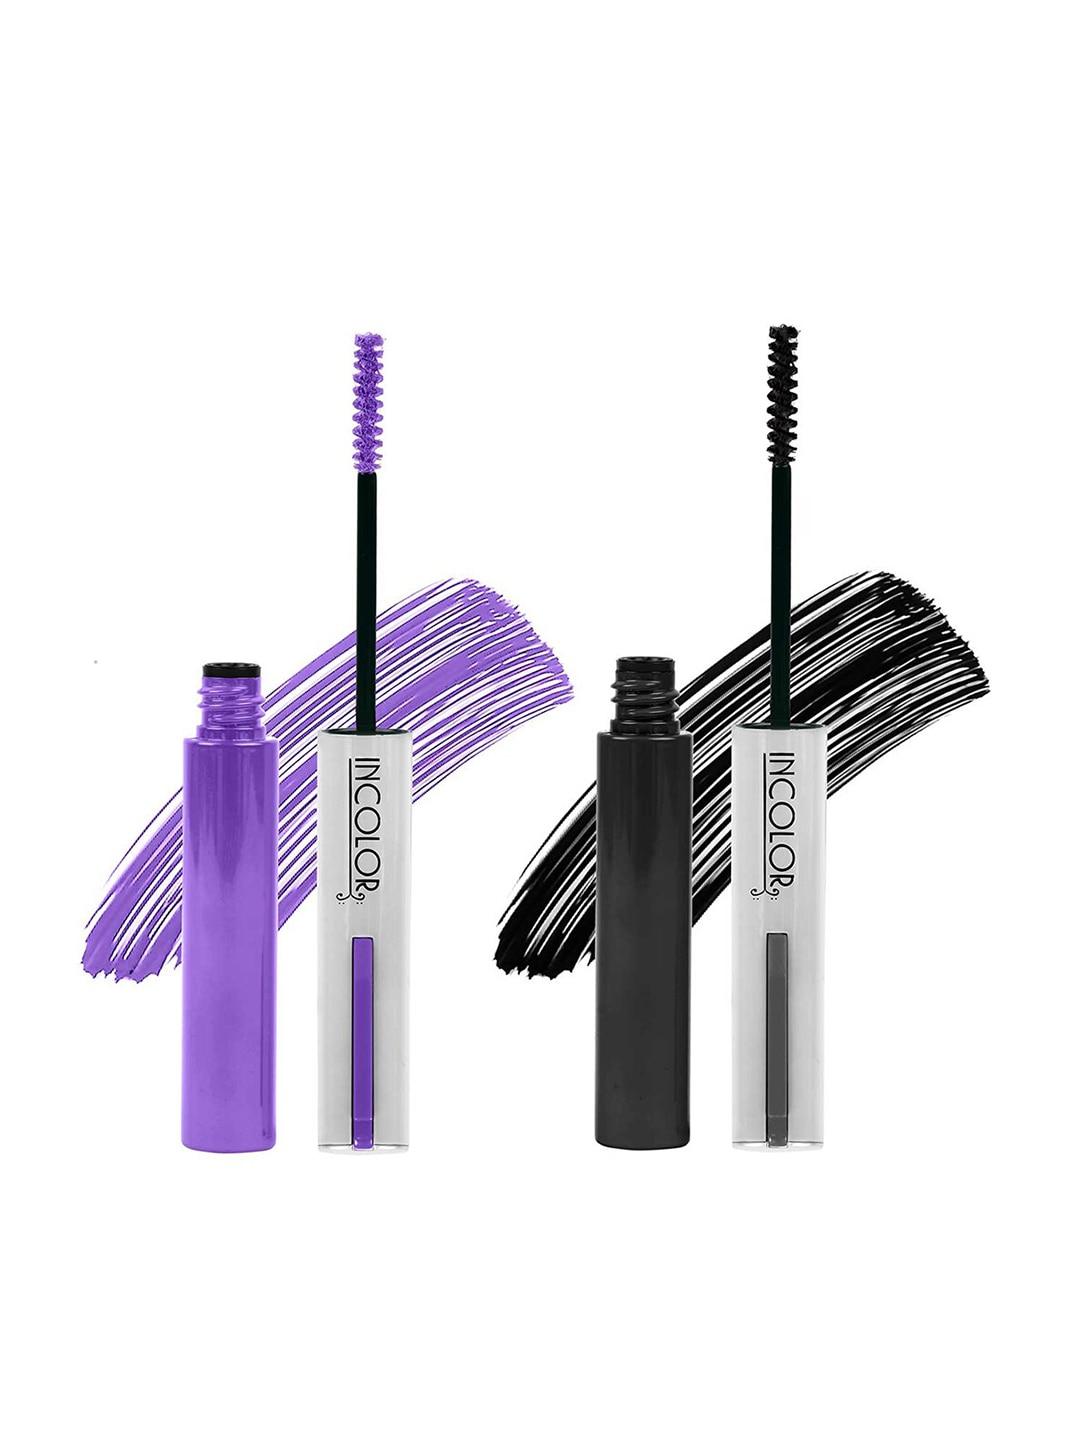 incolor-set-of-2-long-lasting-mascaras-6-ml-each---smoky-black-01-&-true-purple-06